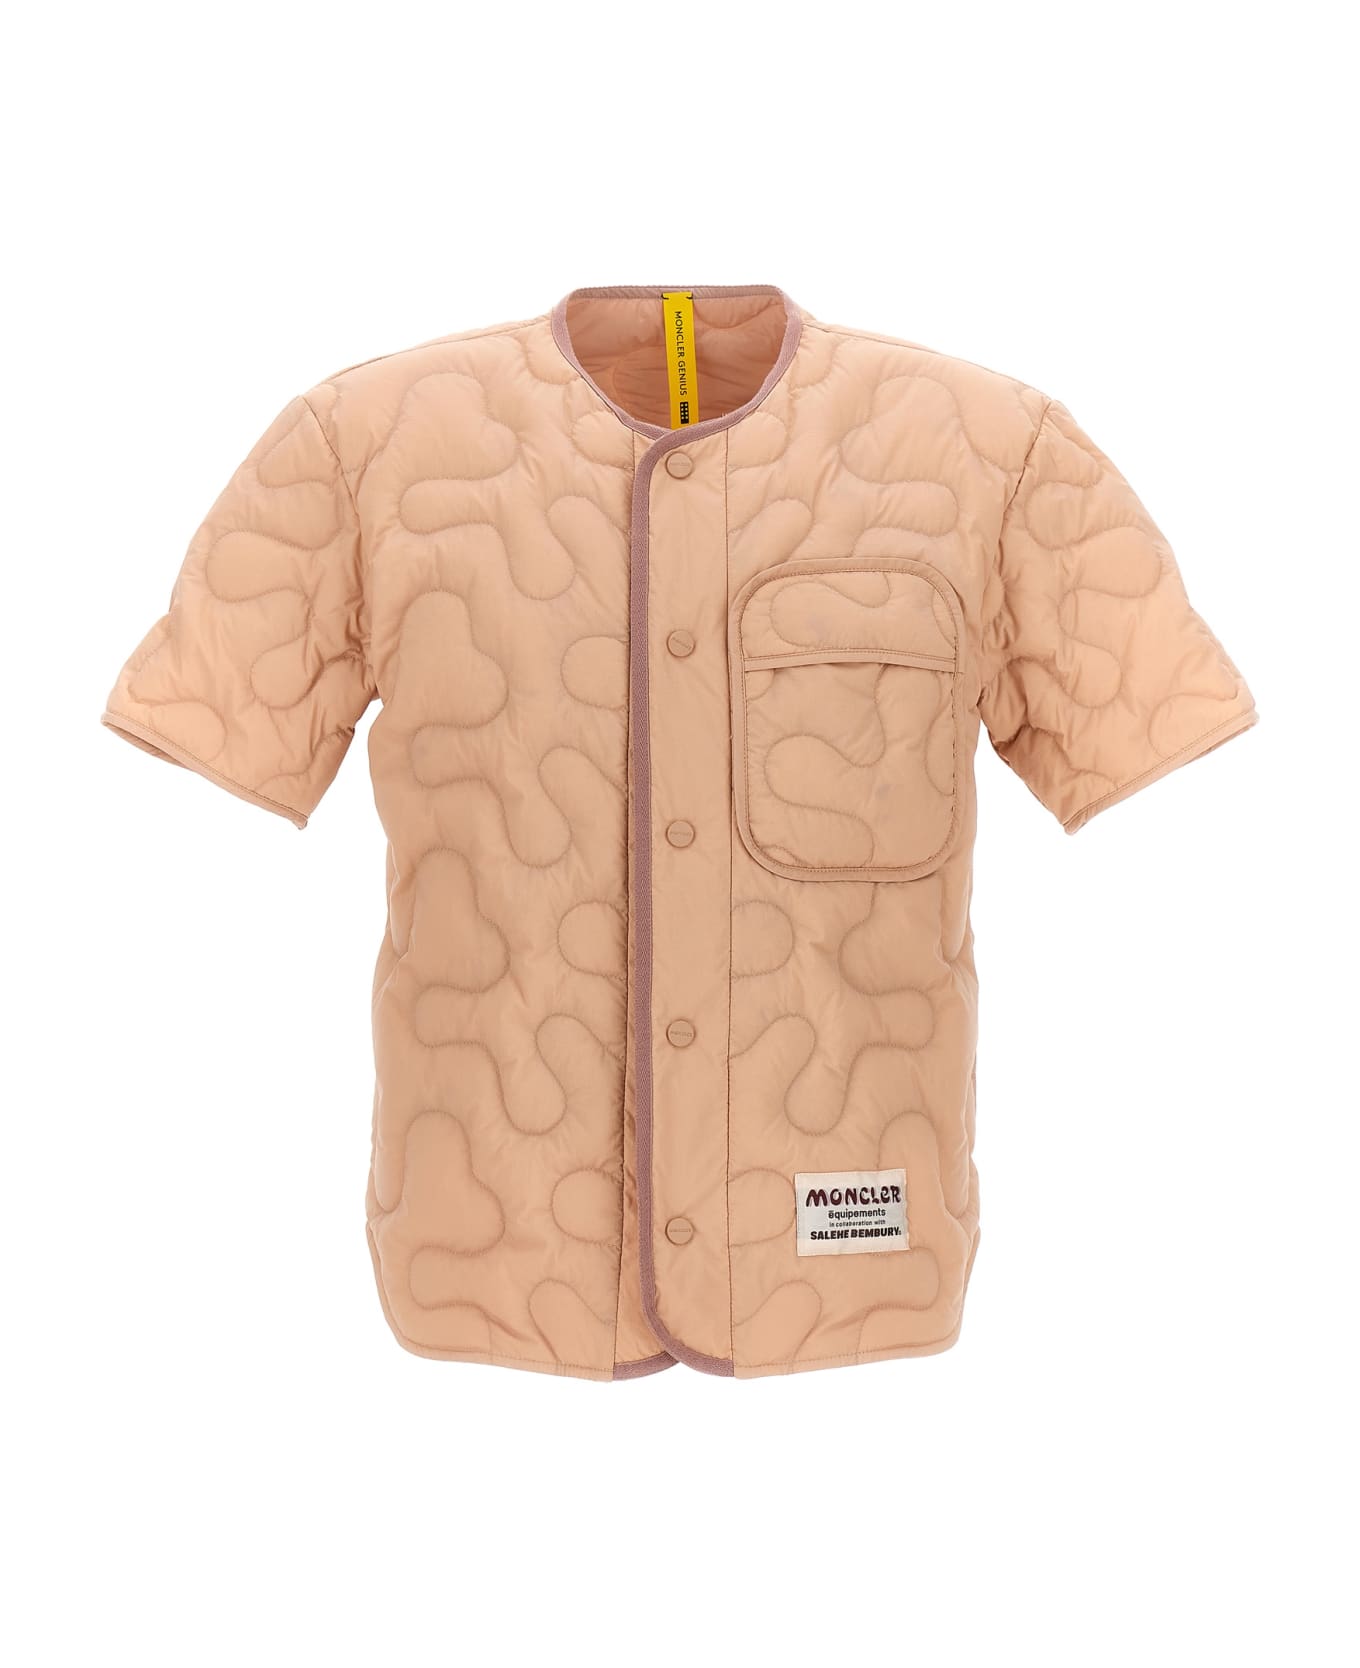 Moncler Genius X Salehe Bembury Padded Shirt - Pink